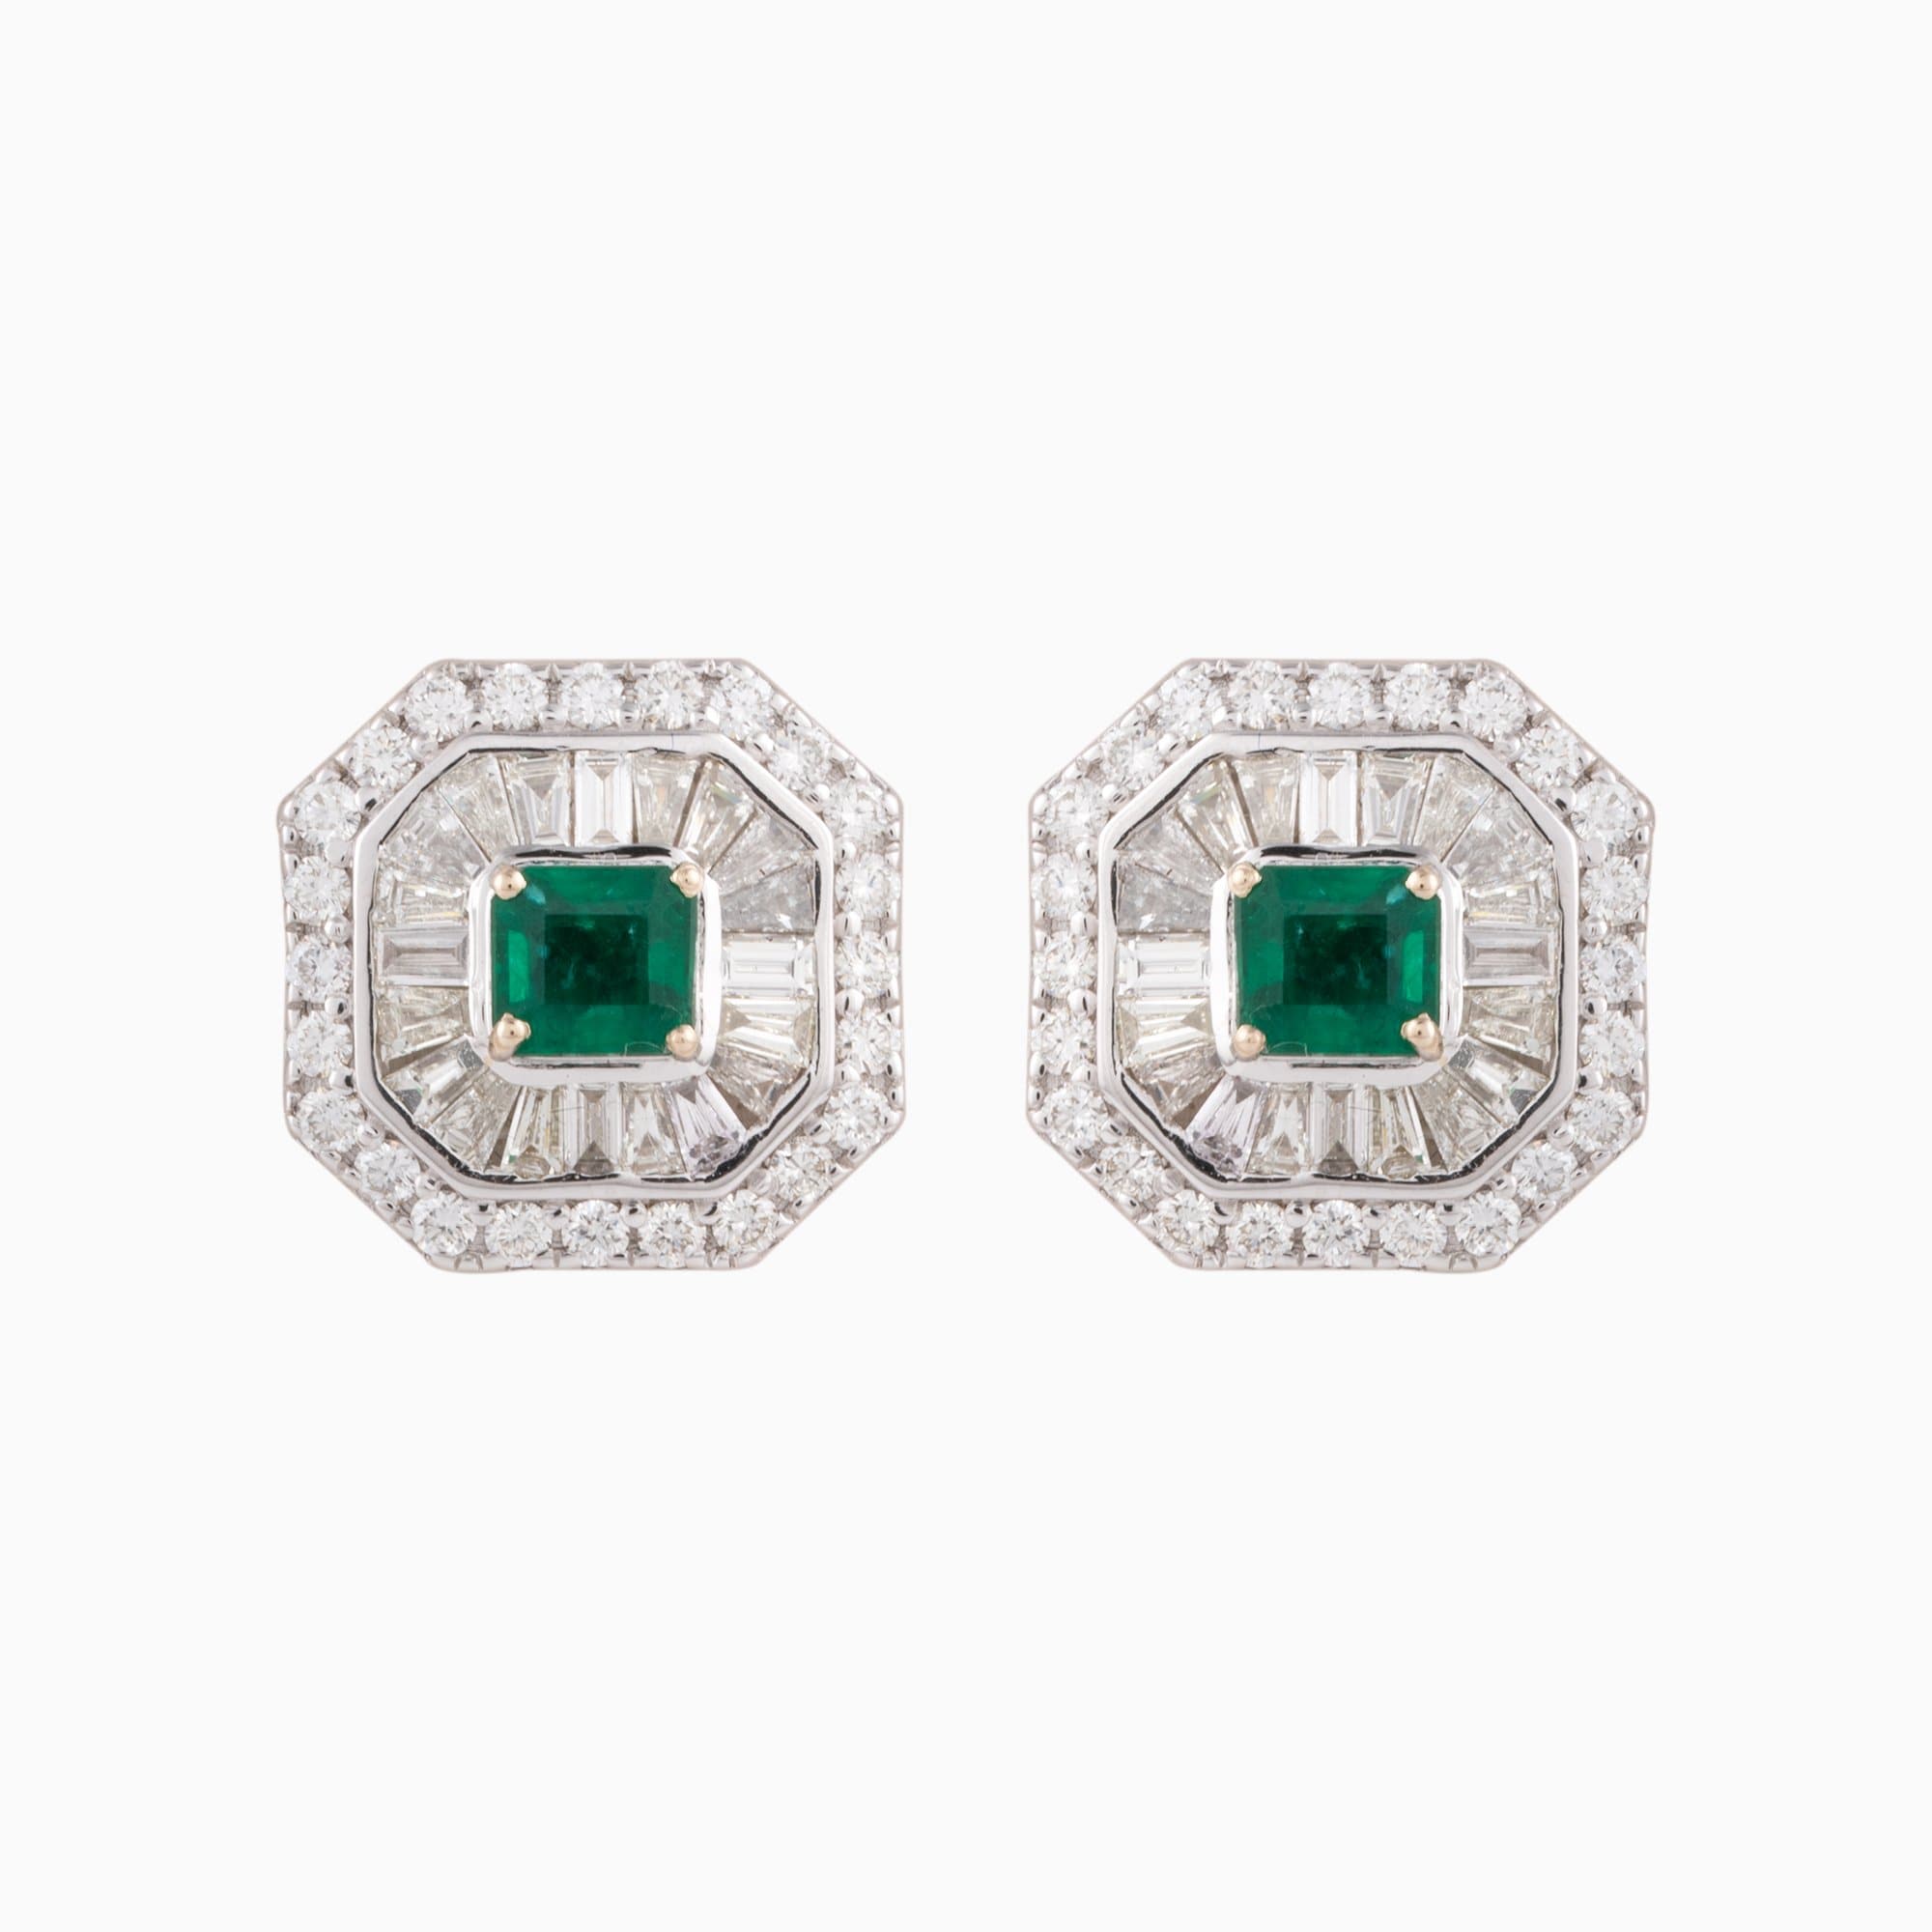 Earring Pair with Octagon Cut Emerald. Round Cut Diamond and Begg Cut Diamond - PGDE0244